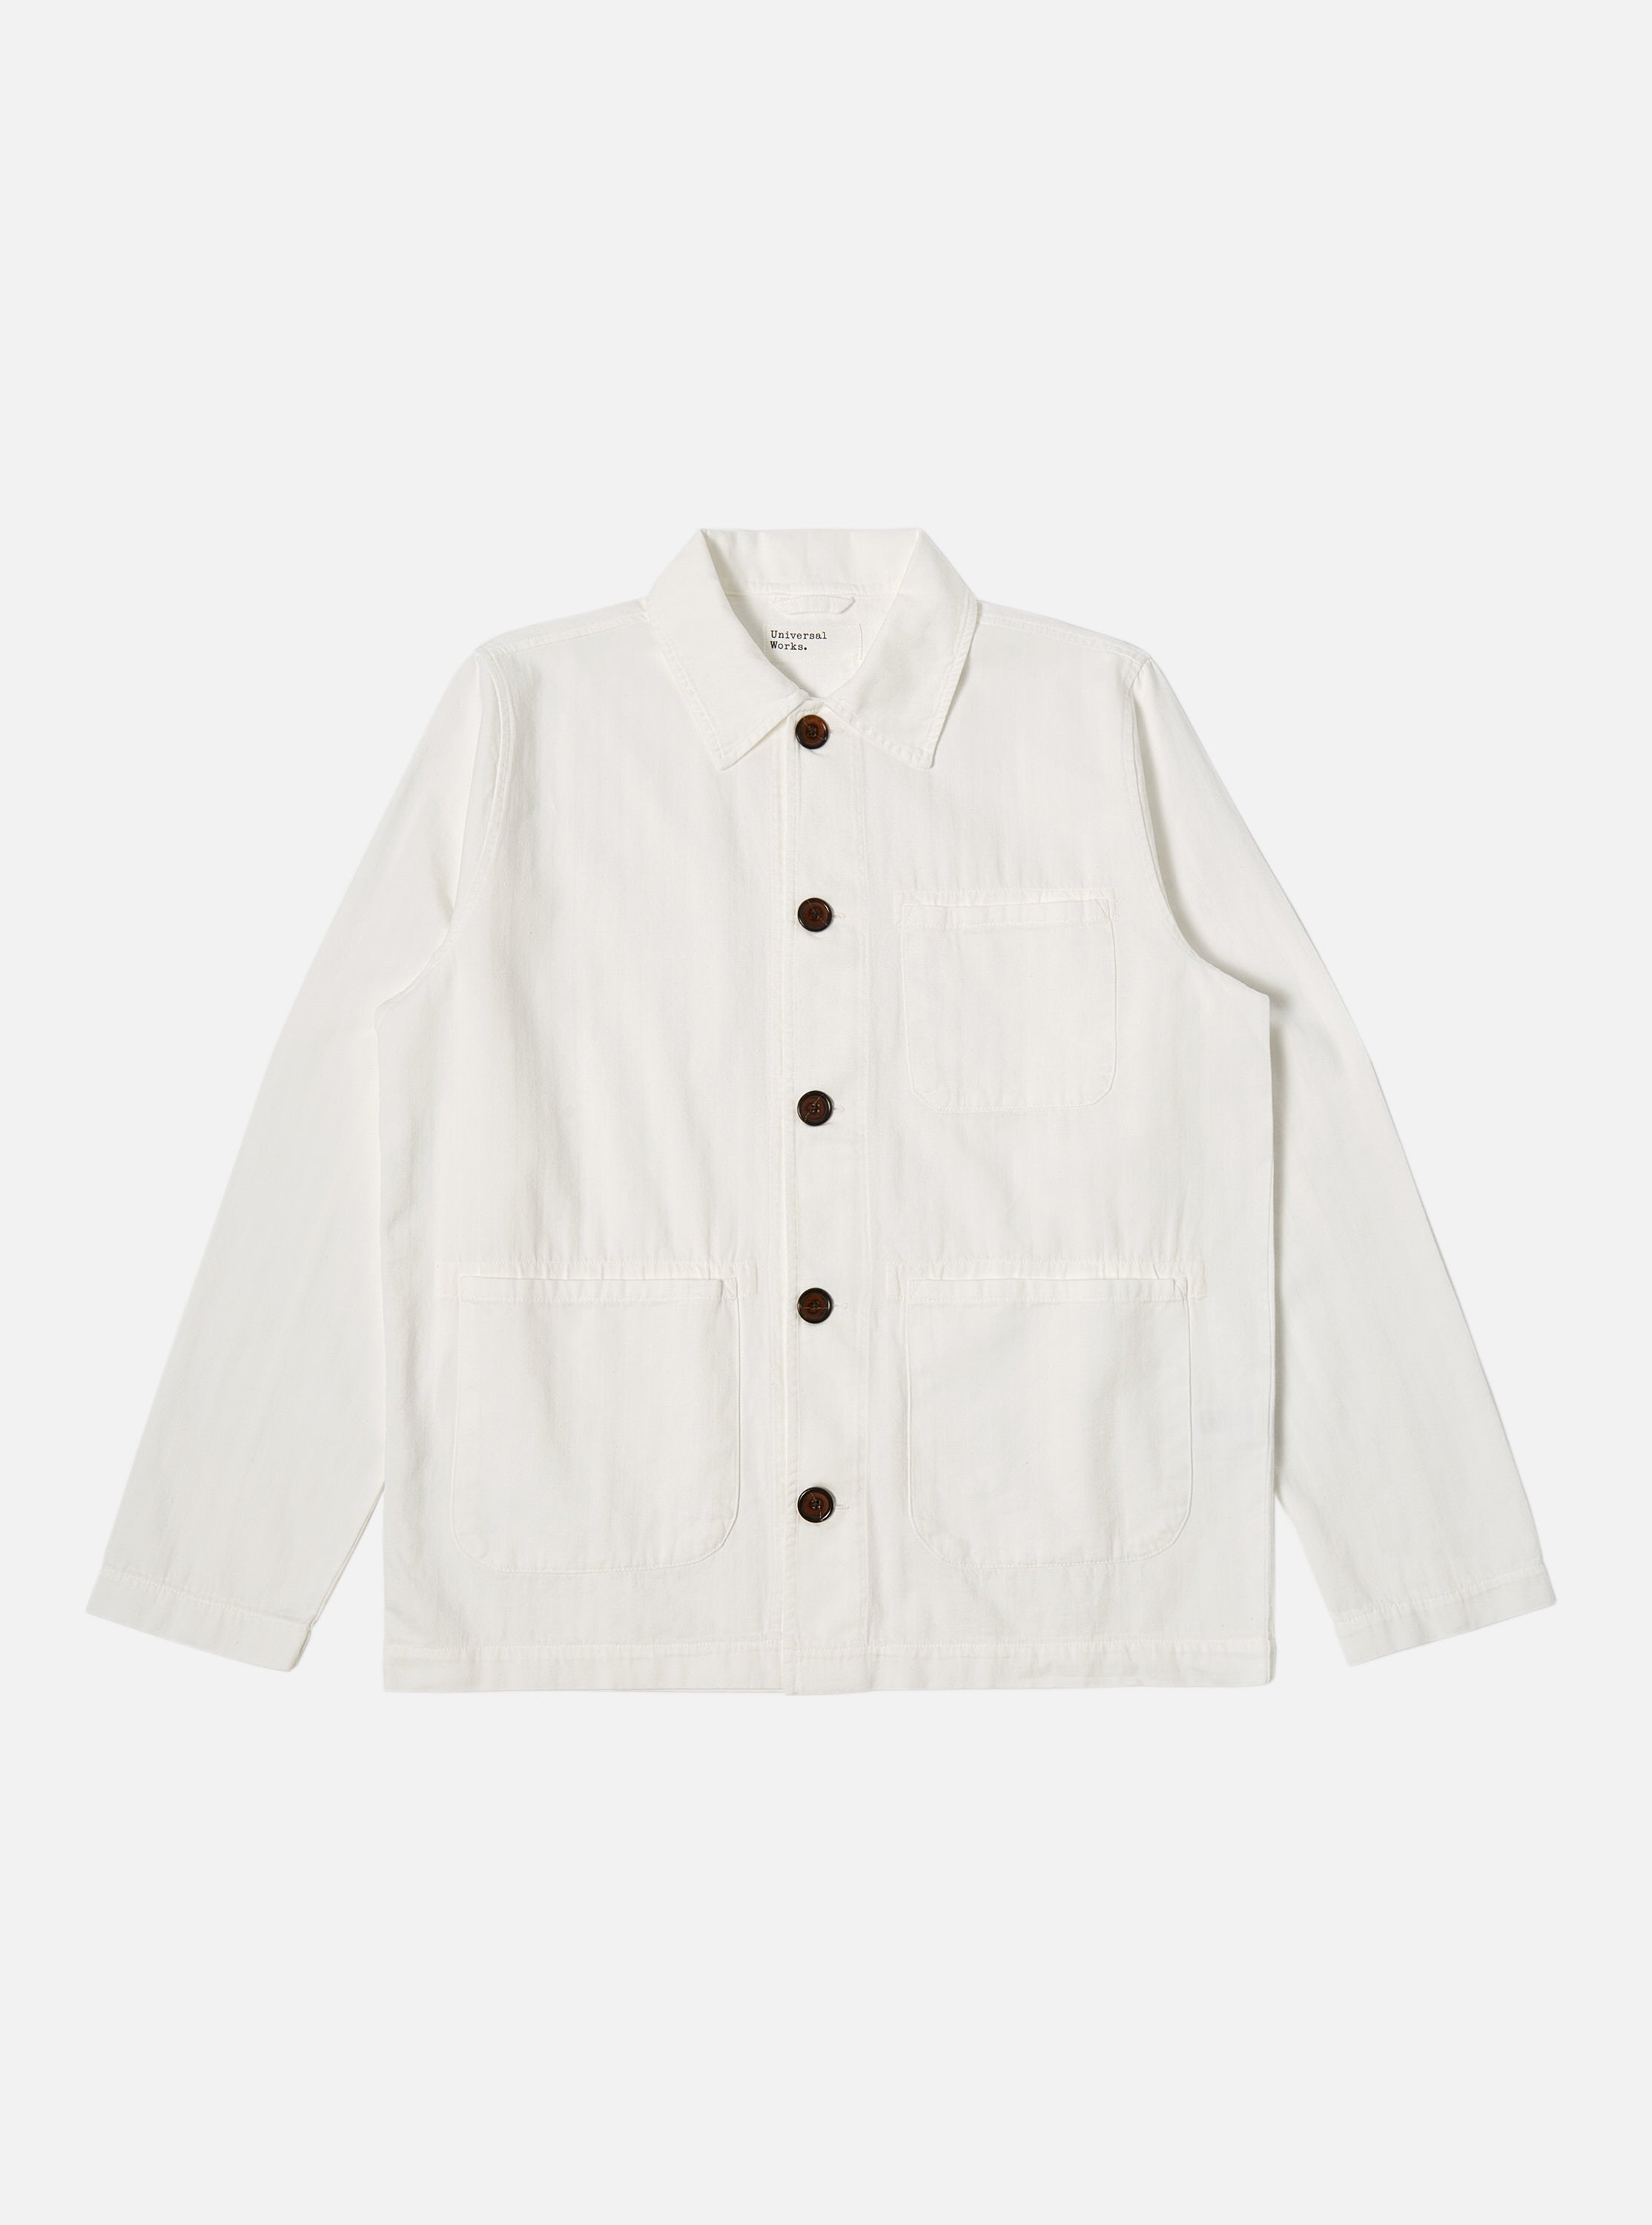 Universal Works Field Jacket in Ecru Italian Herringbone Cotton